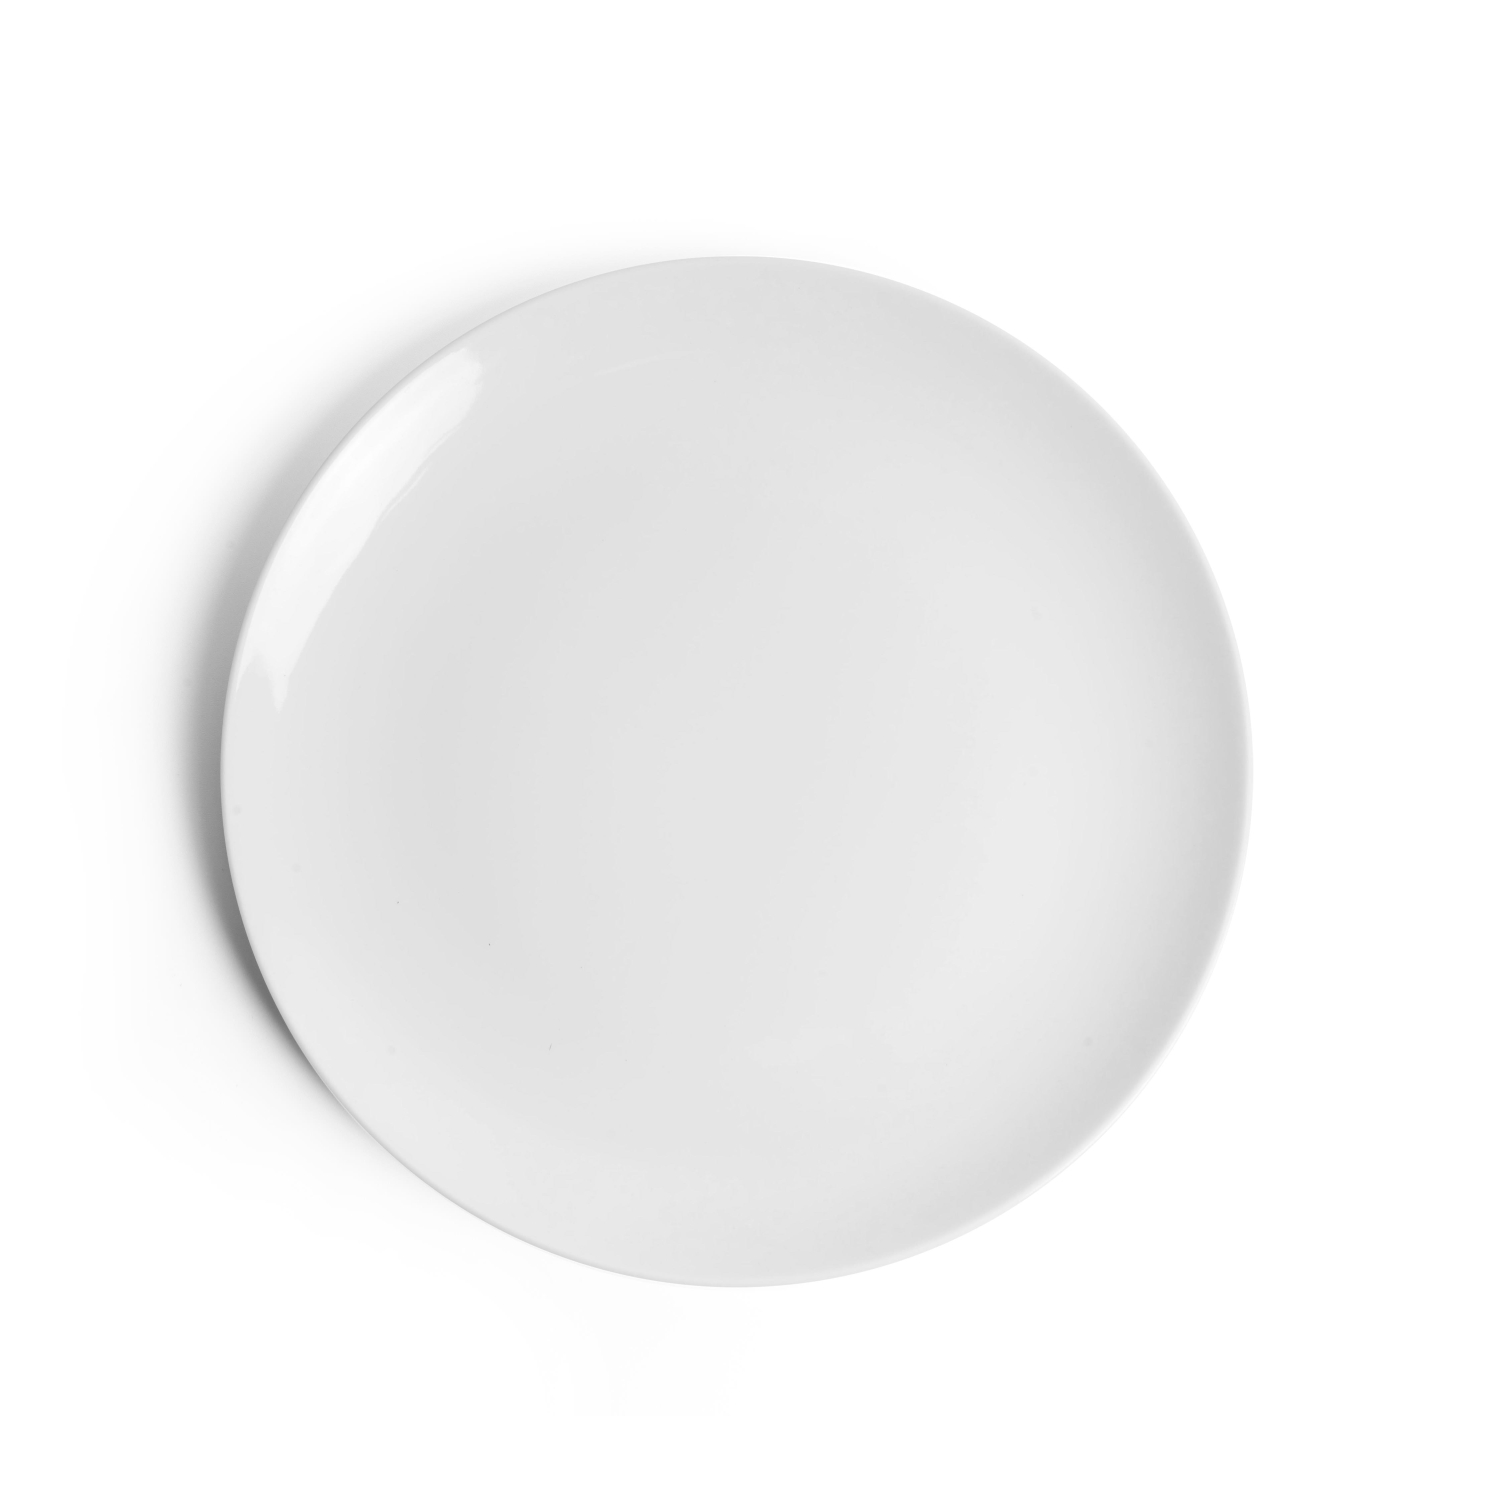 Тарелка обеденная Кулинарк белая сфера 26,5 см тарелка обеденная кулинарк сфера космос 26 5 см